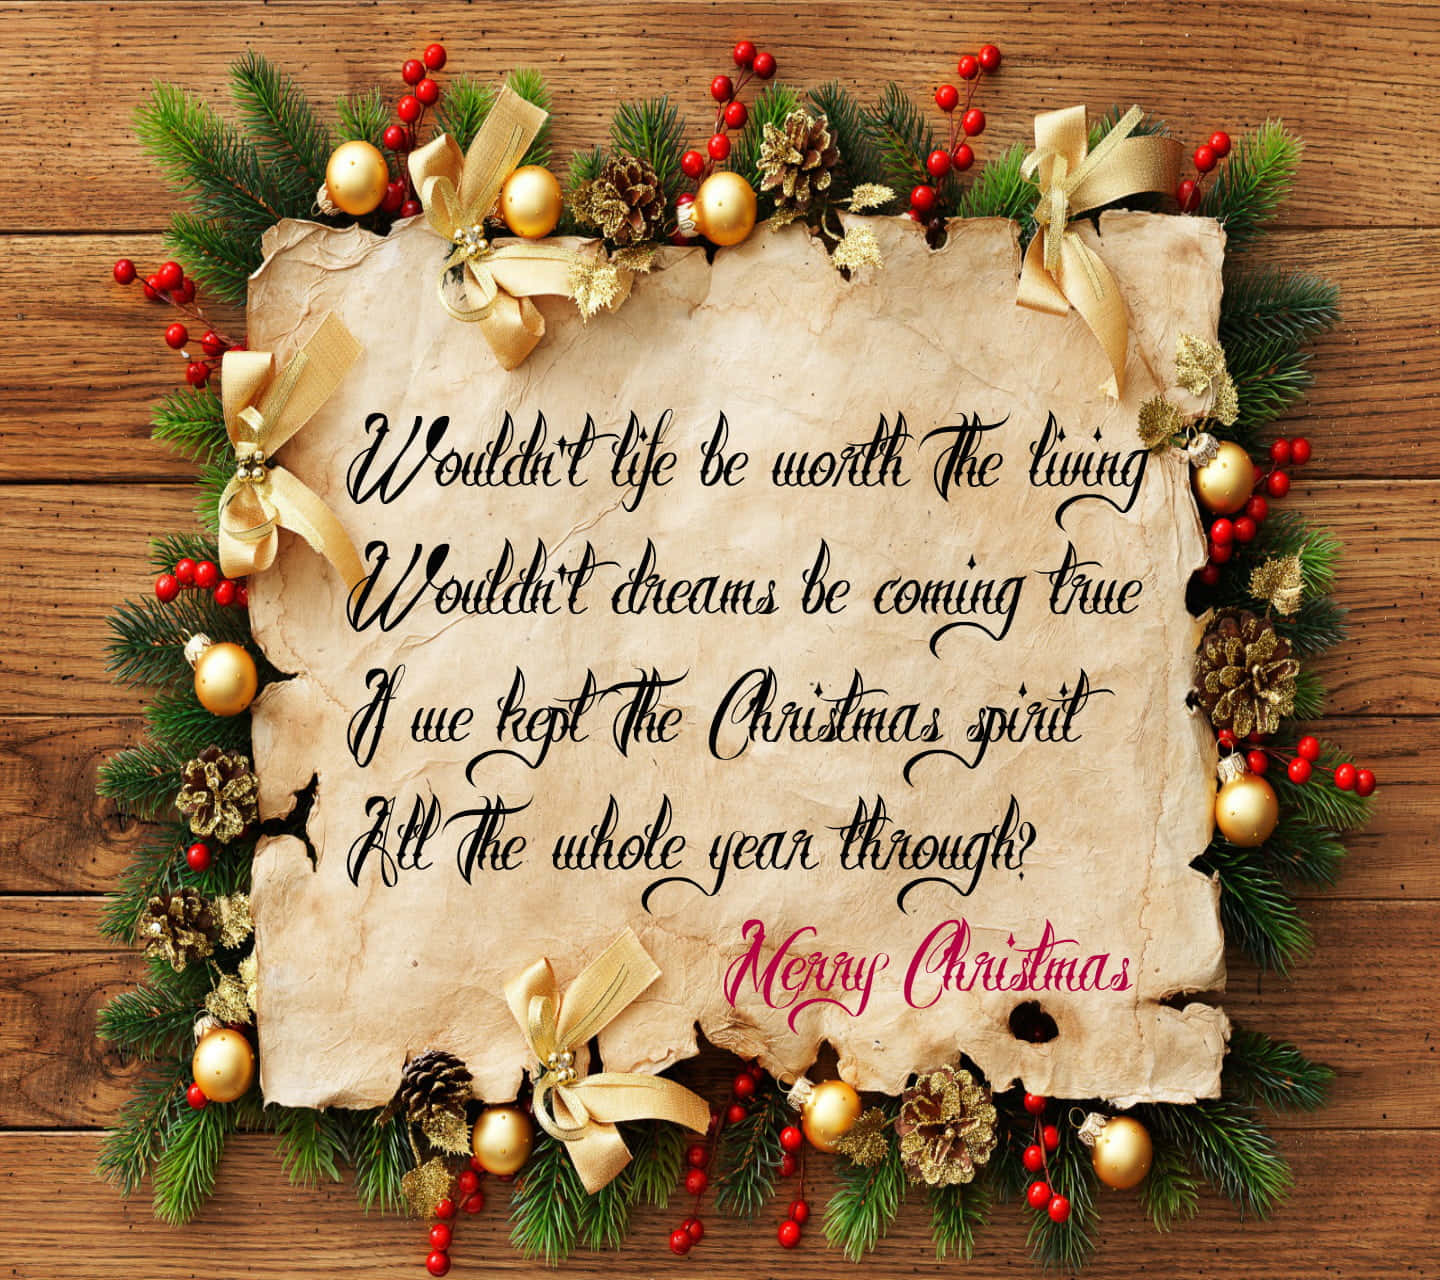 Christmas Quote: “Christmas isn't a season. It's a feeling". Wallpaper